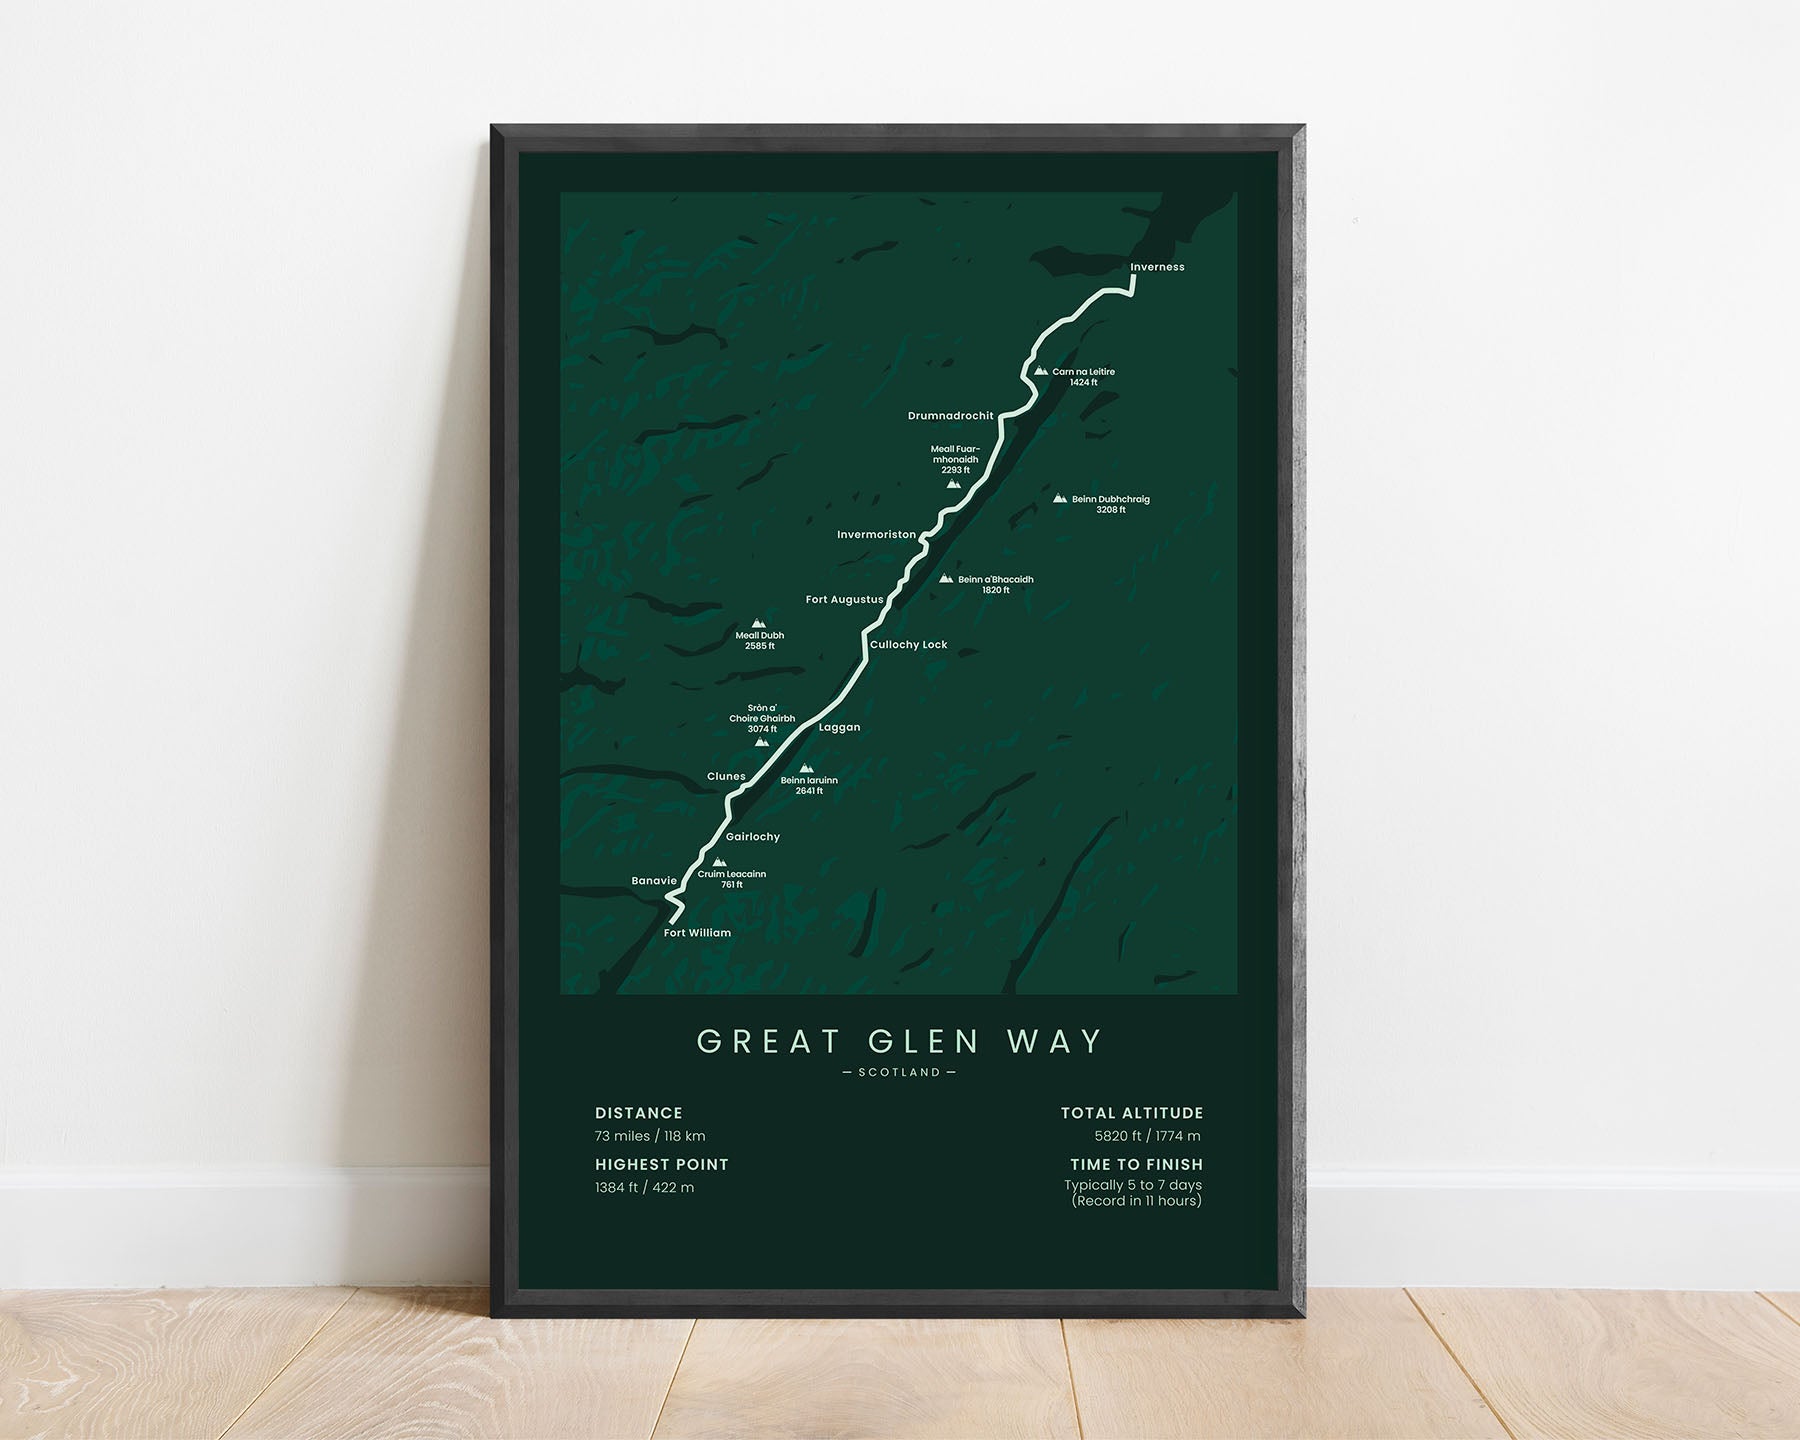 Great Glen Way (Scottish Highlands) trail art print with green background